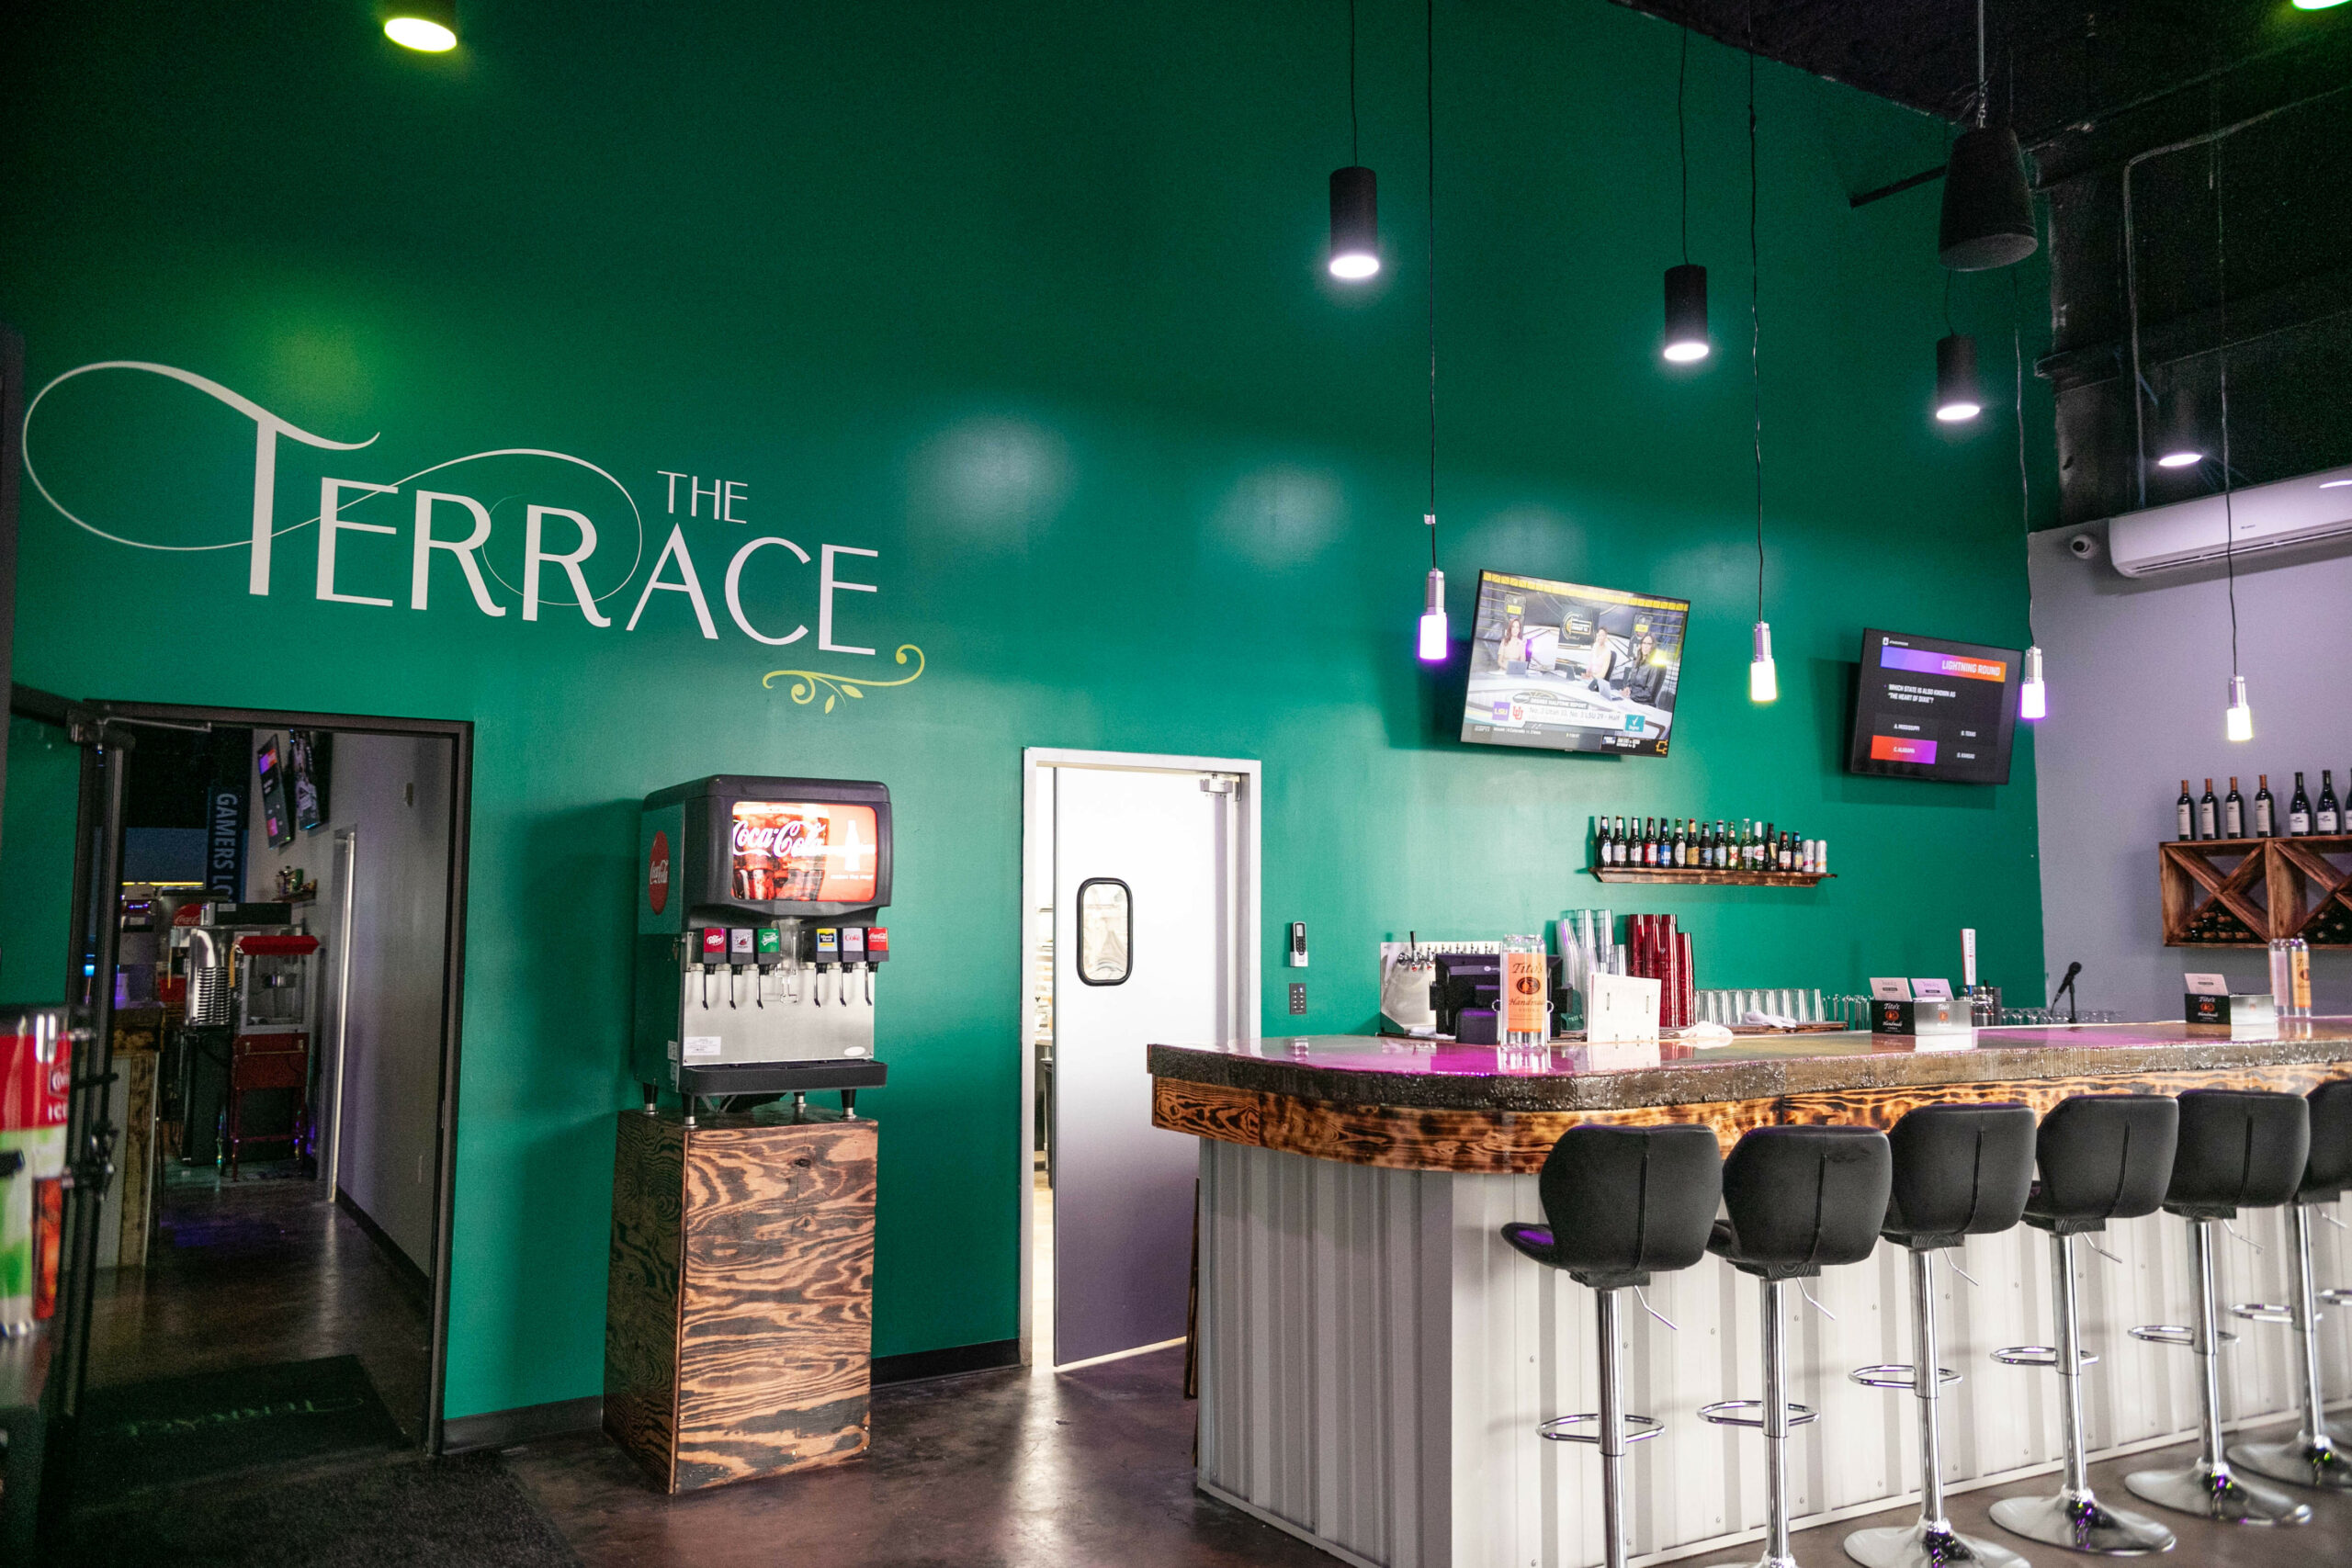 The Terrace Restaurant bar